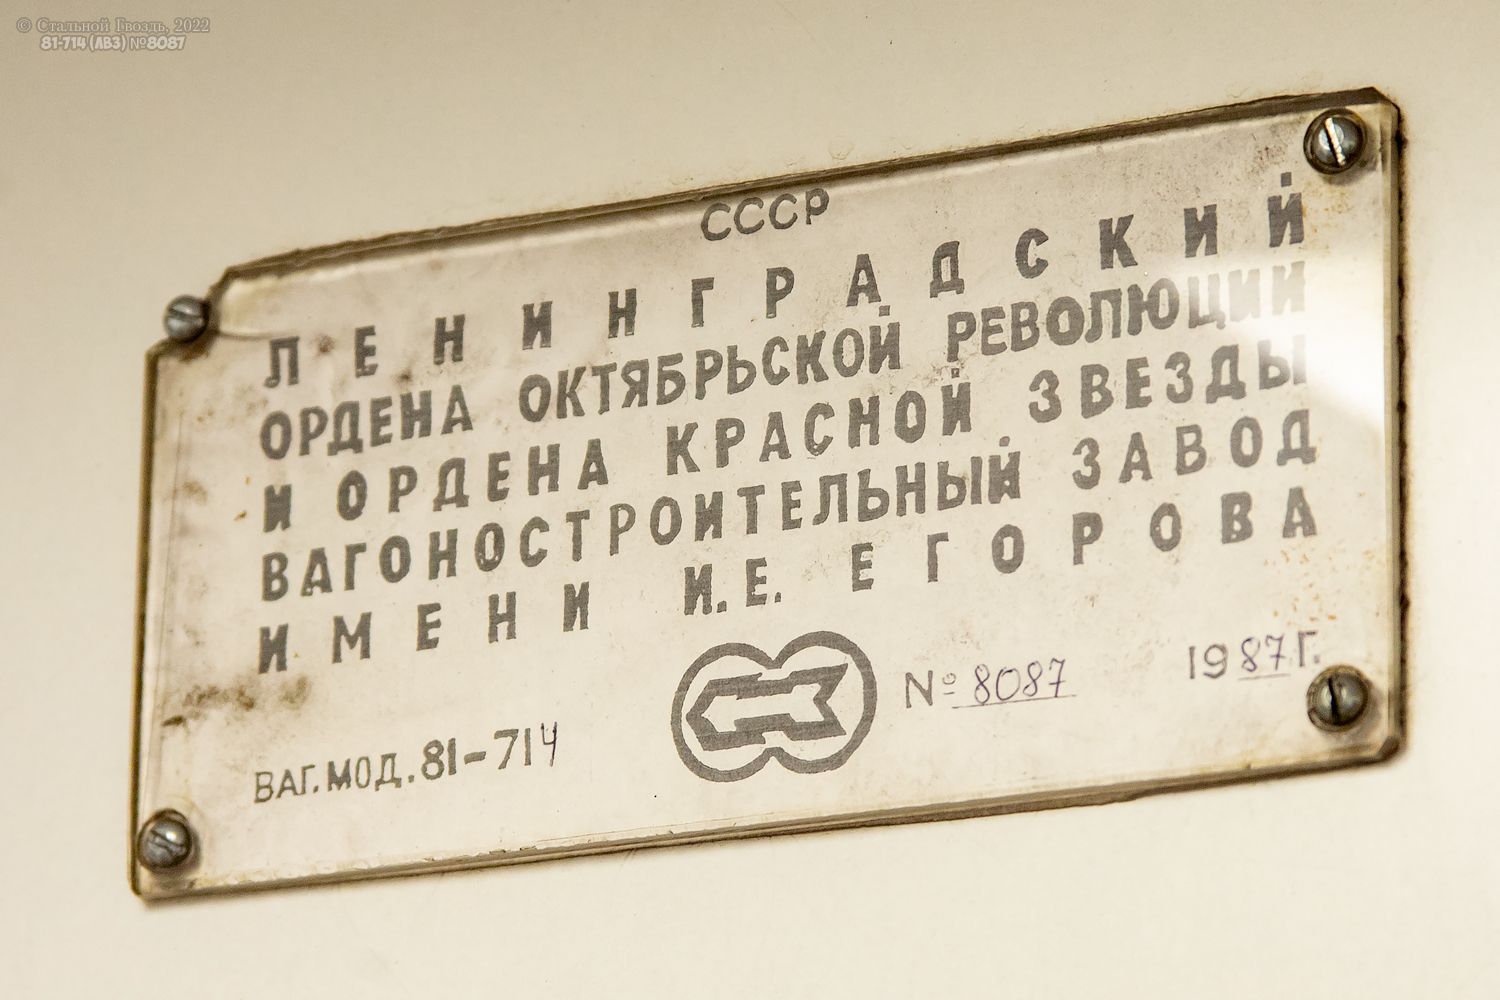 Moskwa, 81-714 (LVZ) Nr 8087